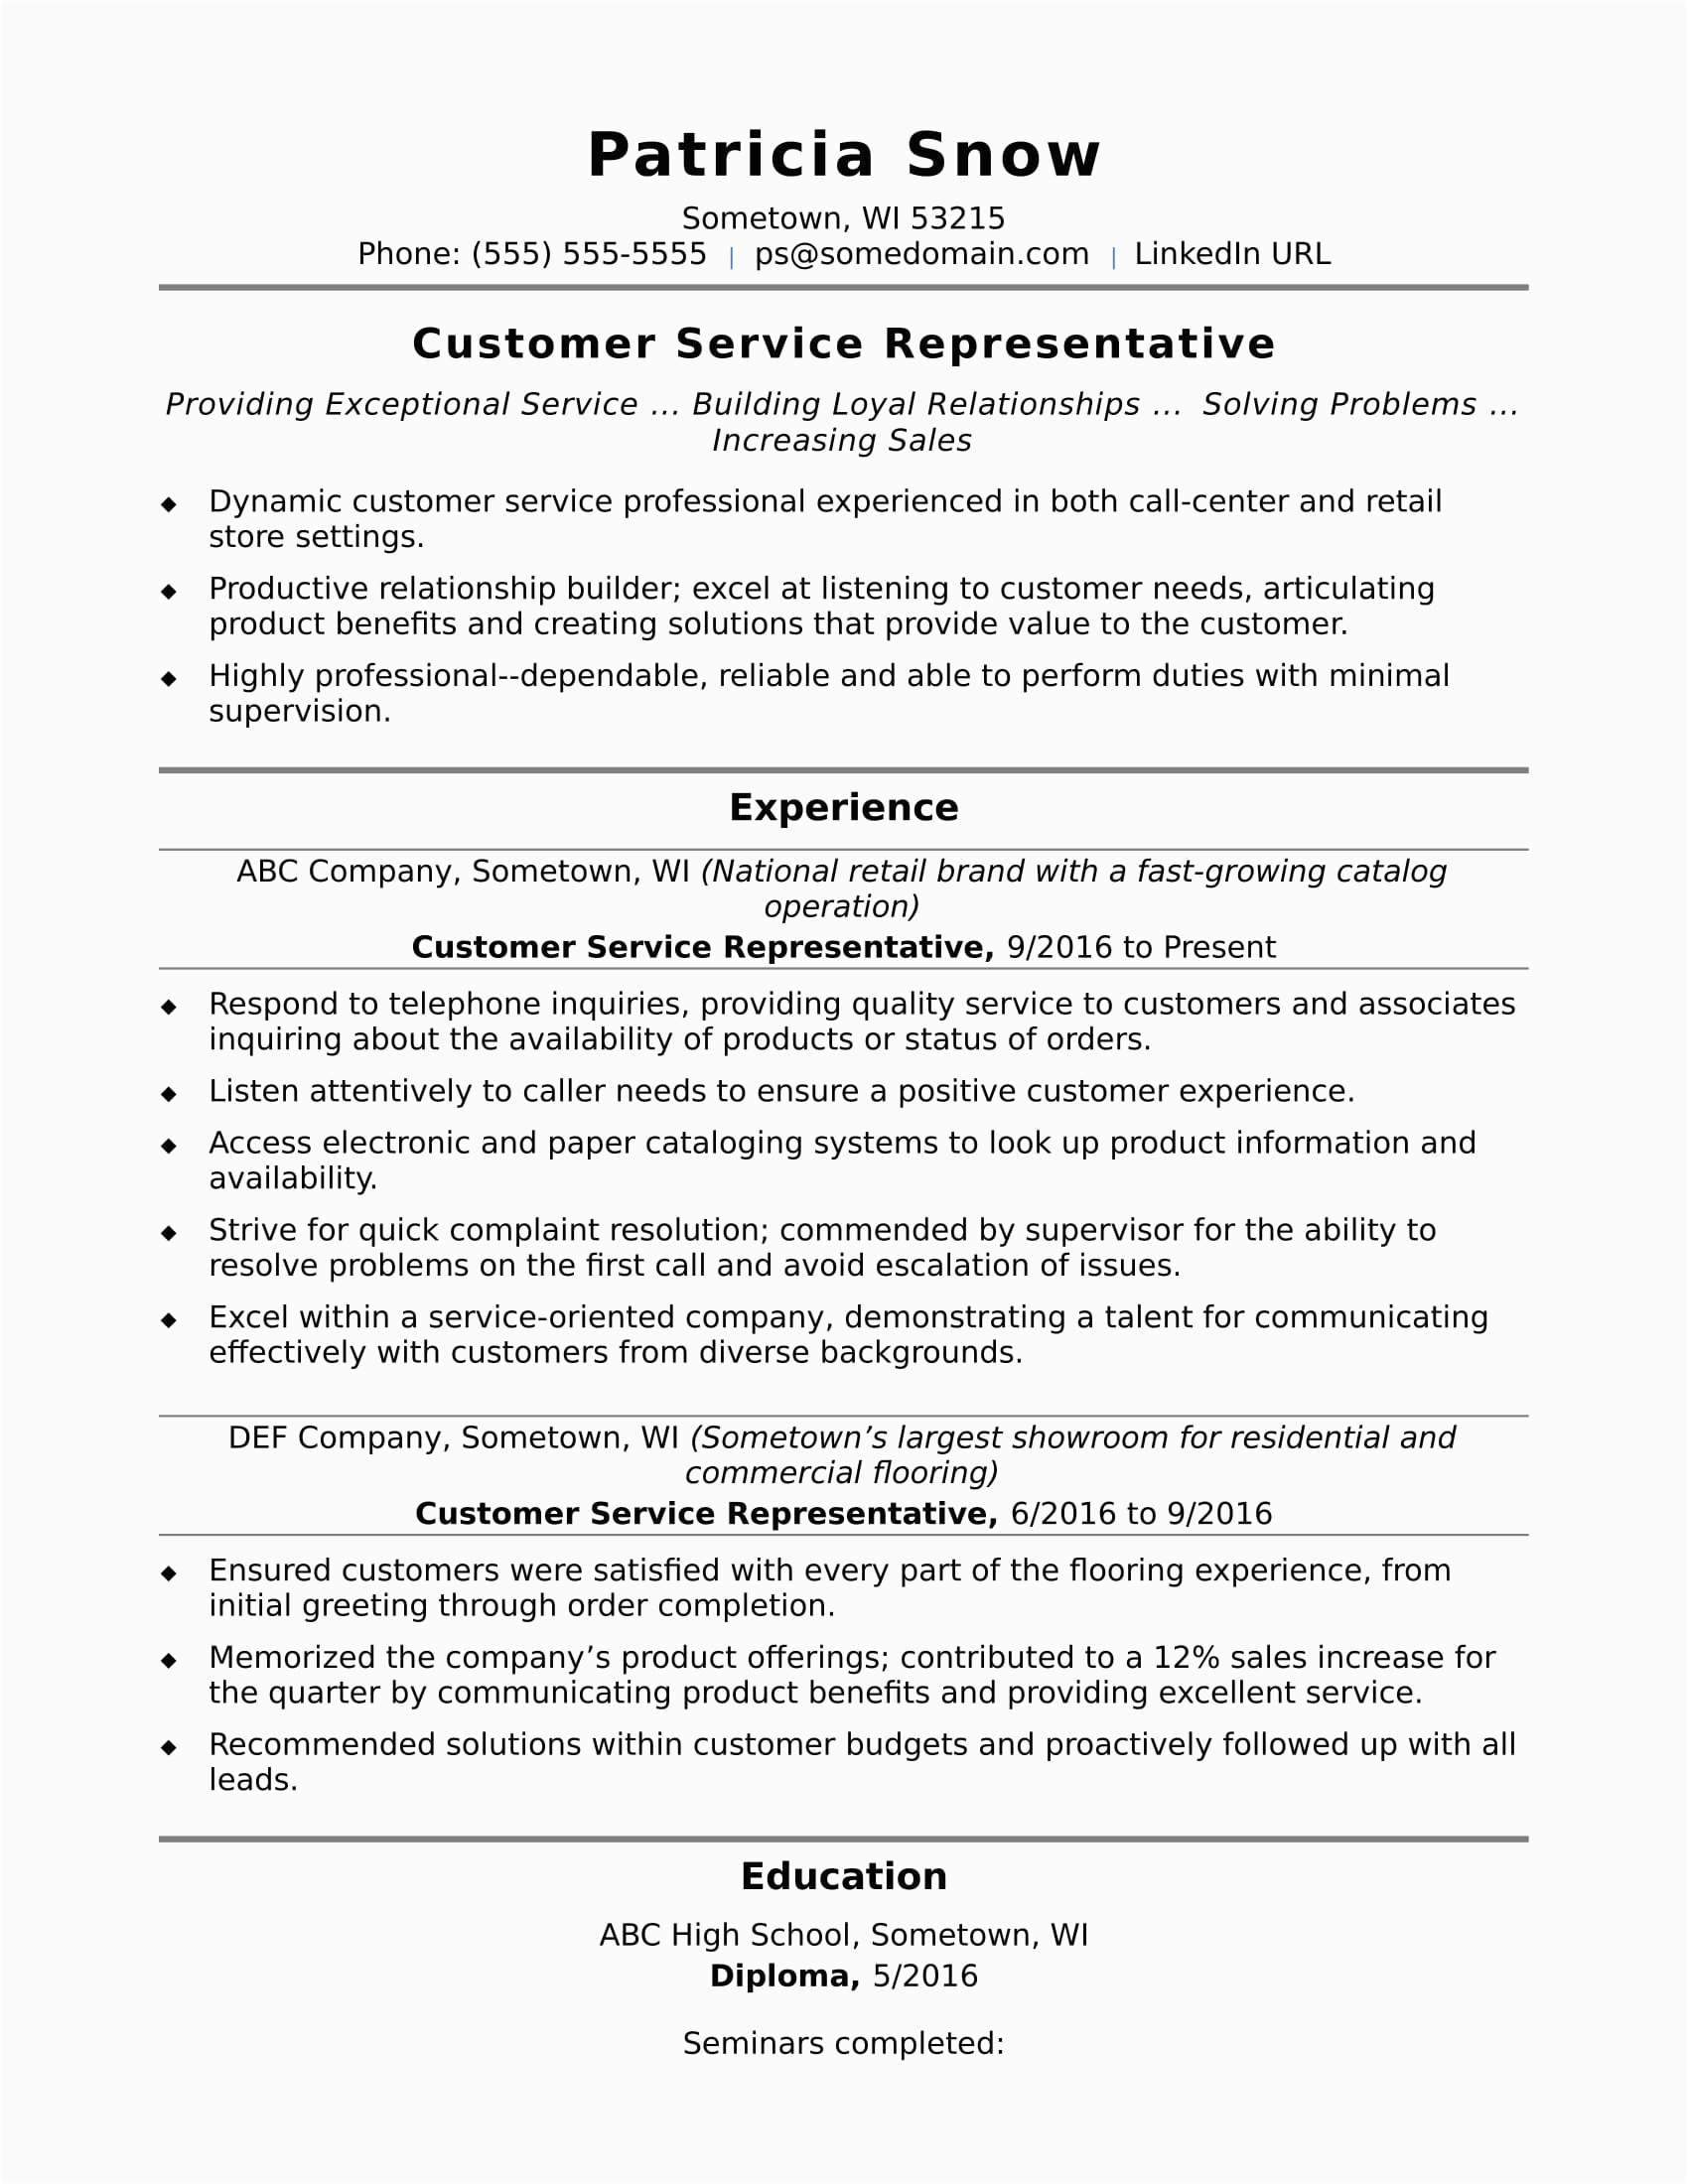 Free Customer Service Representative Resume Template Customer Service Representative Resume Sample